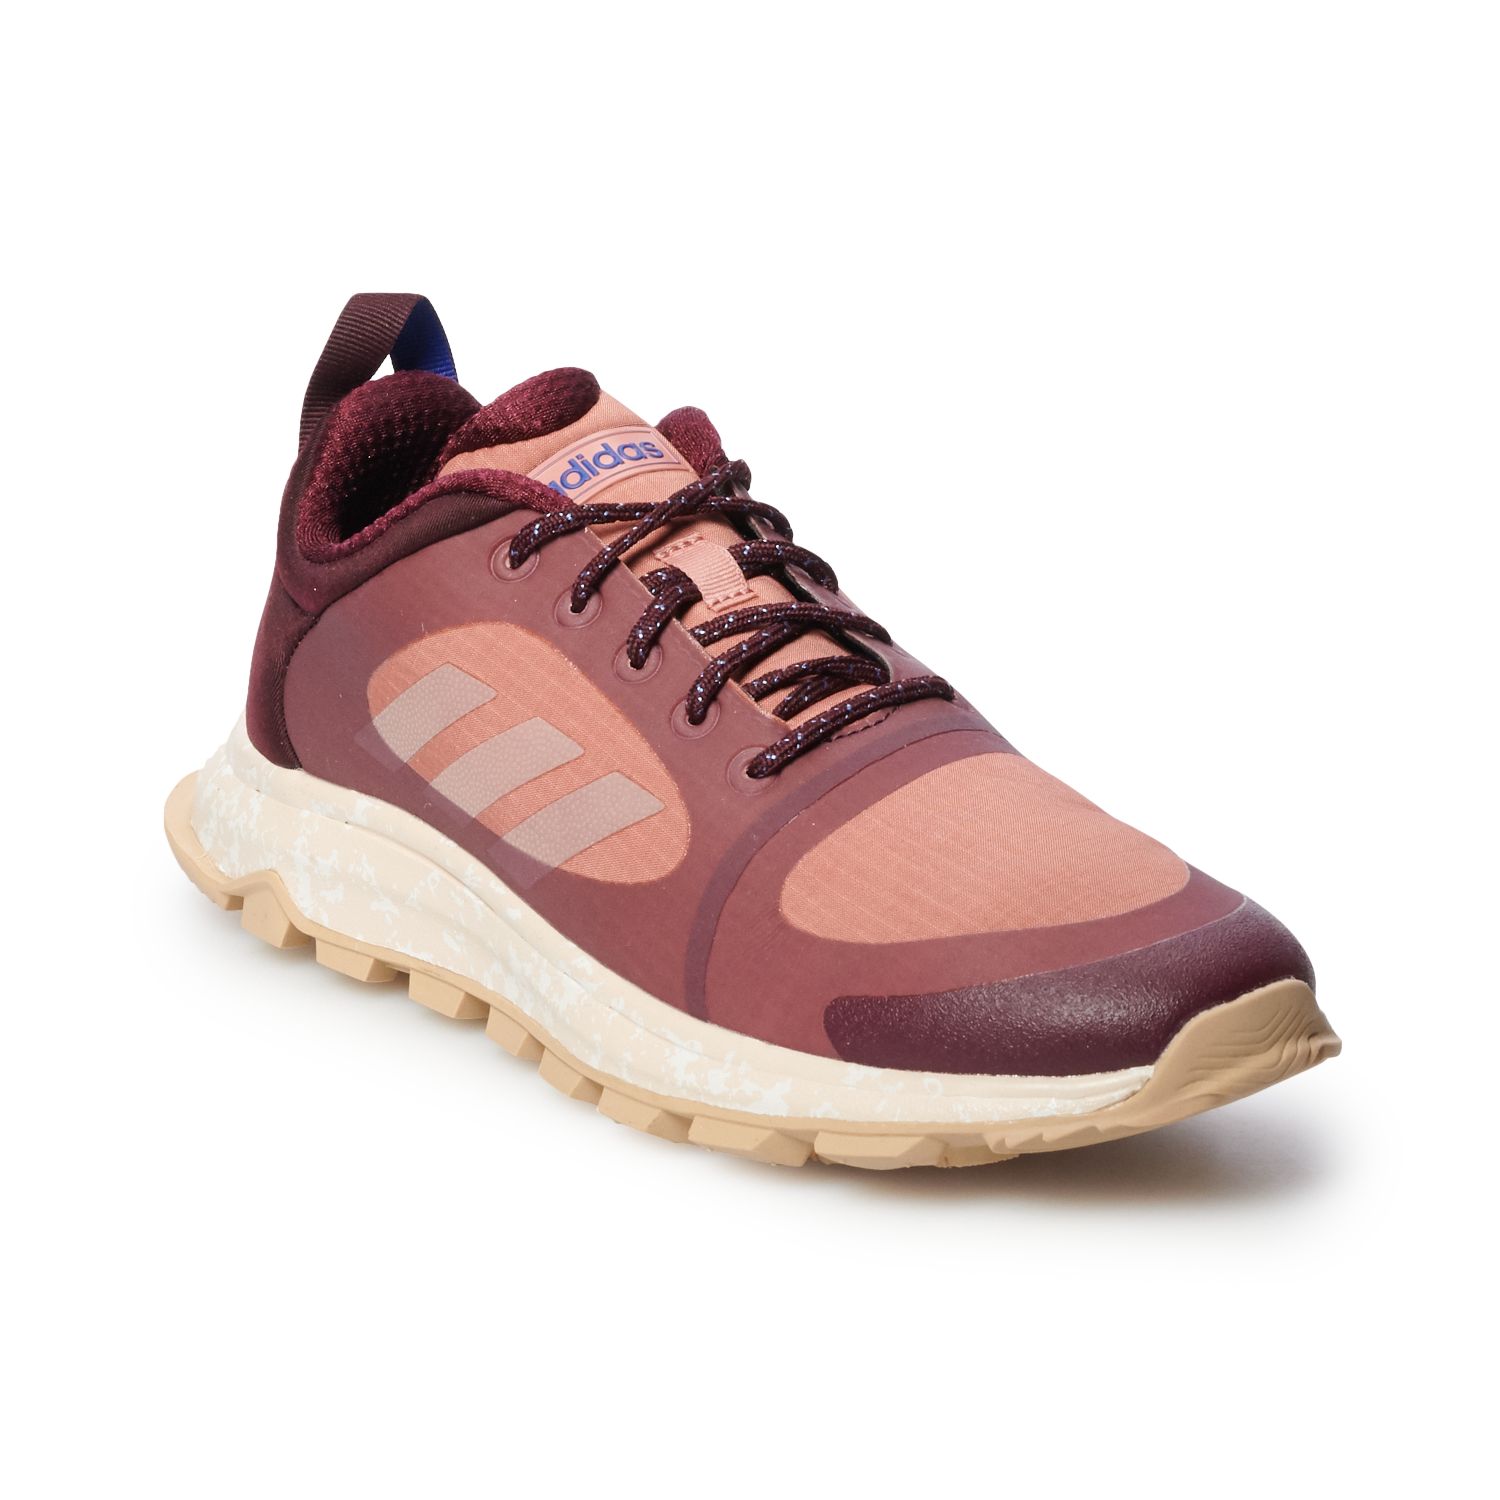 adidas women's response trail x running shoes